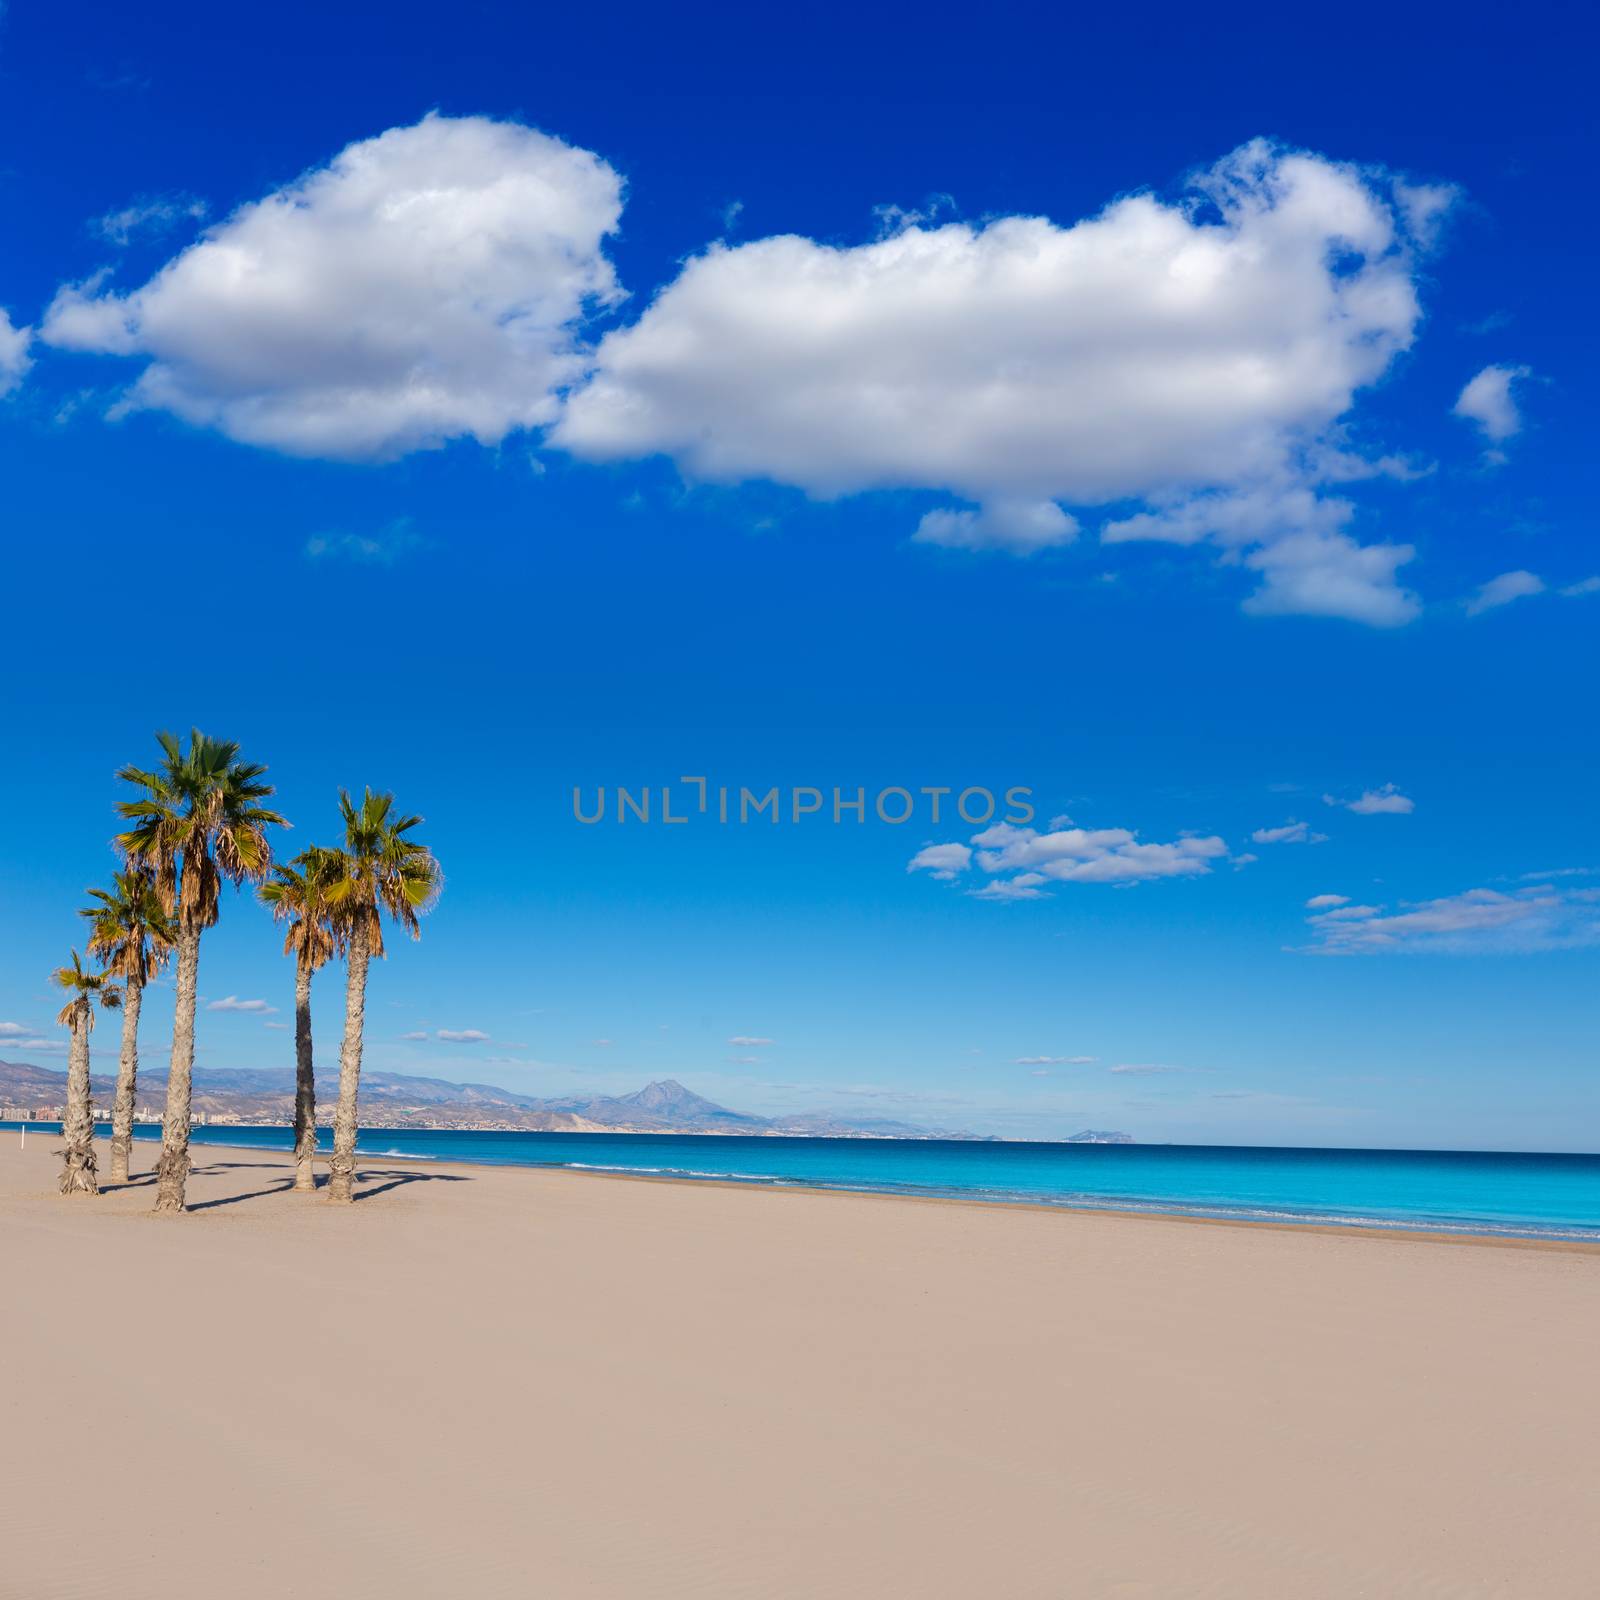 Alicante San Juan beach with palms trees of Mediterranean by lunamarina